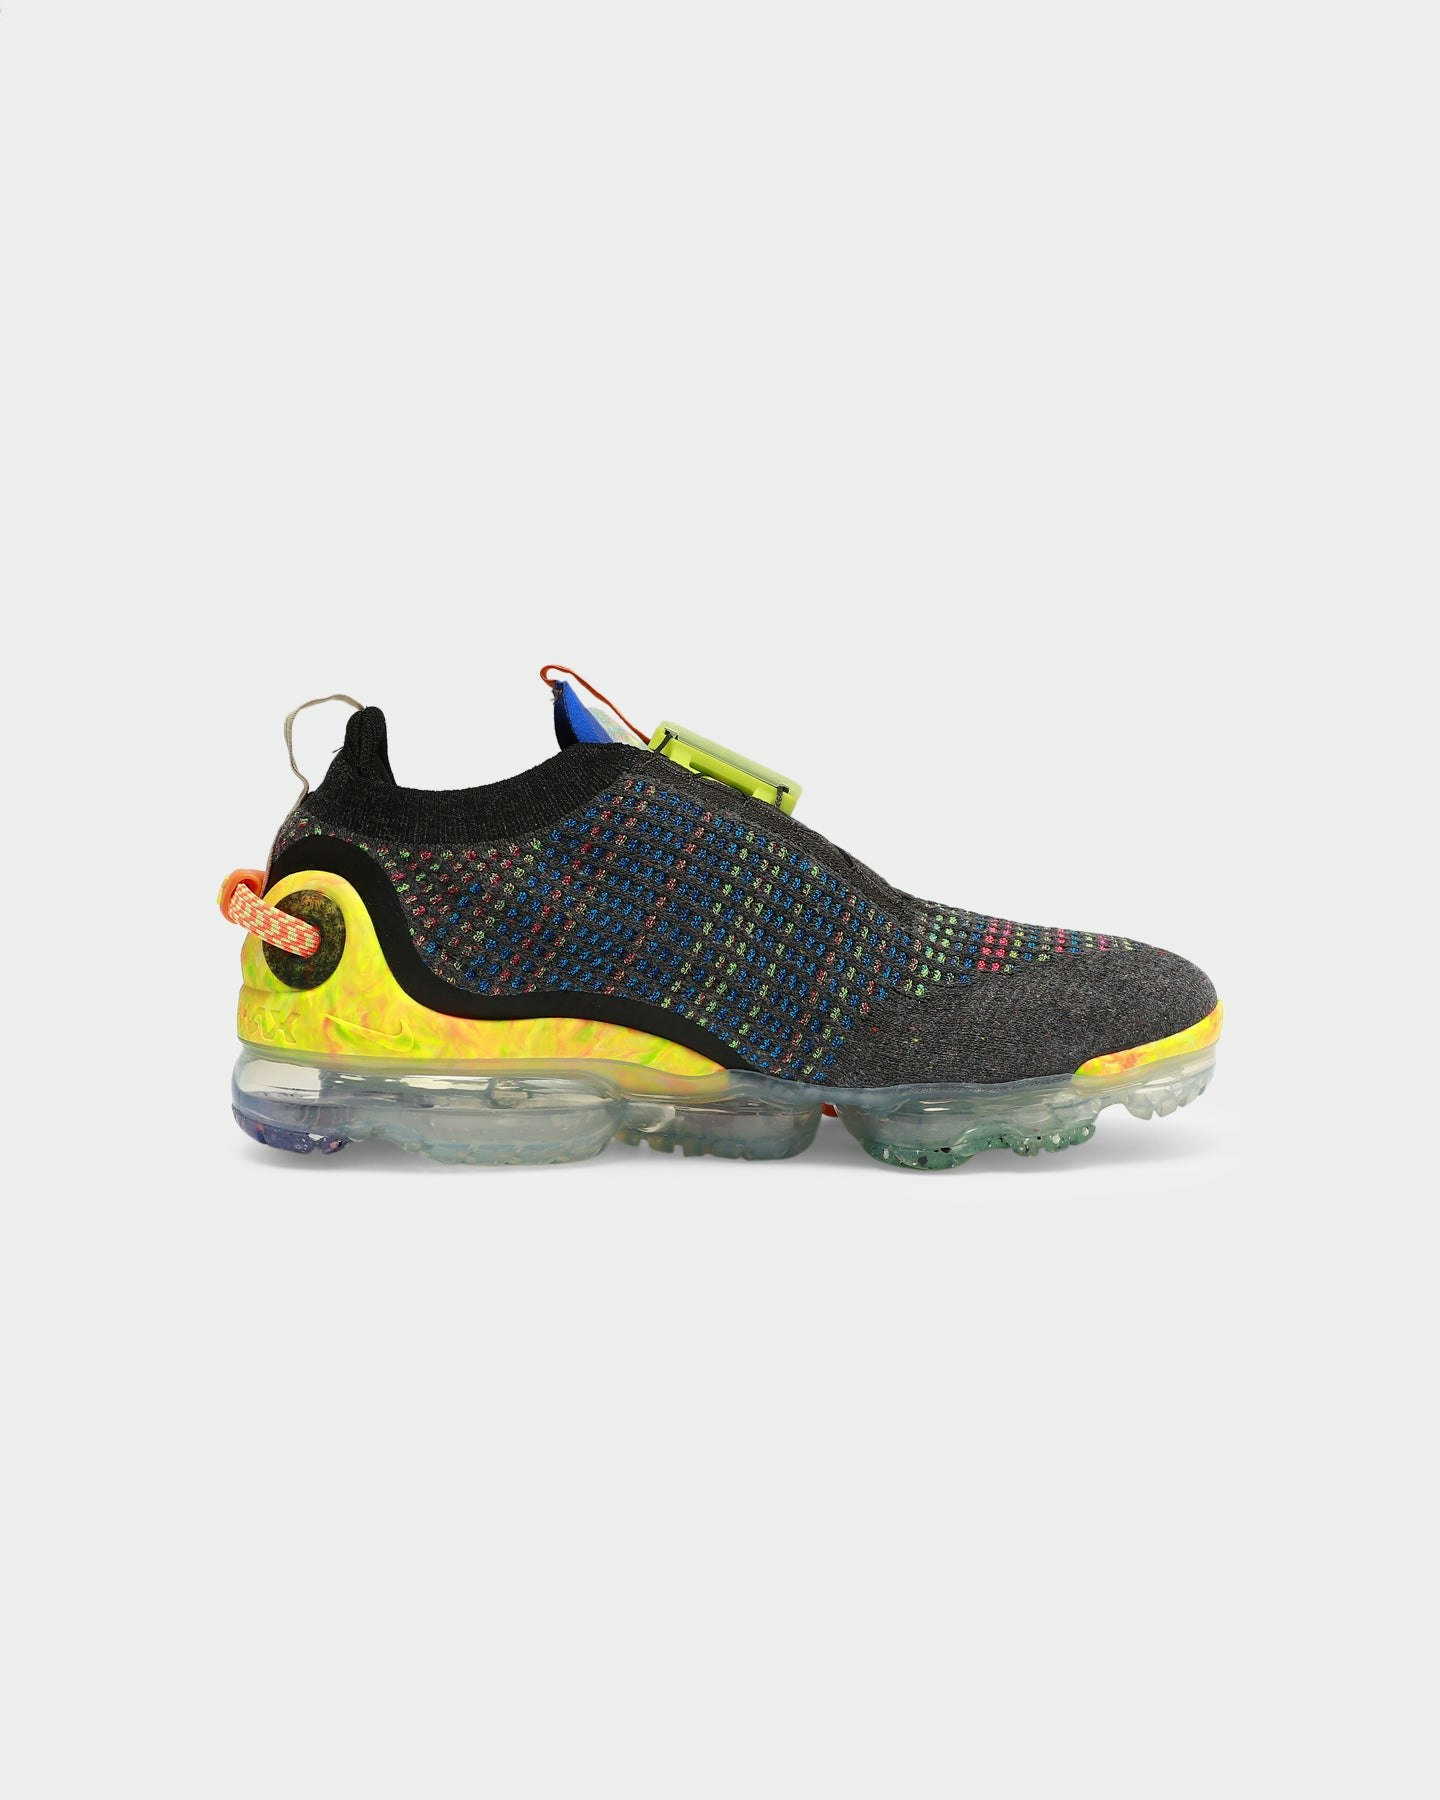 Custom Color Nike Vapormax Plus in 2020 Fresh shoes